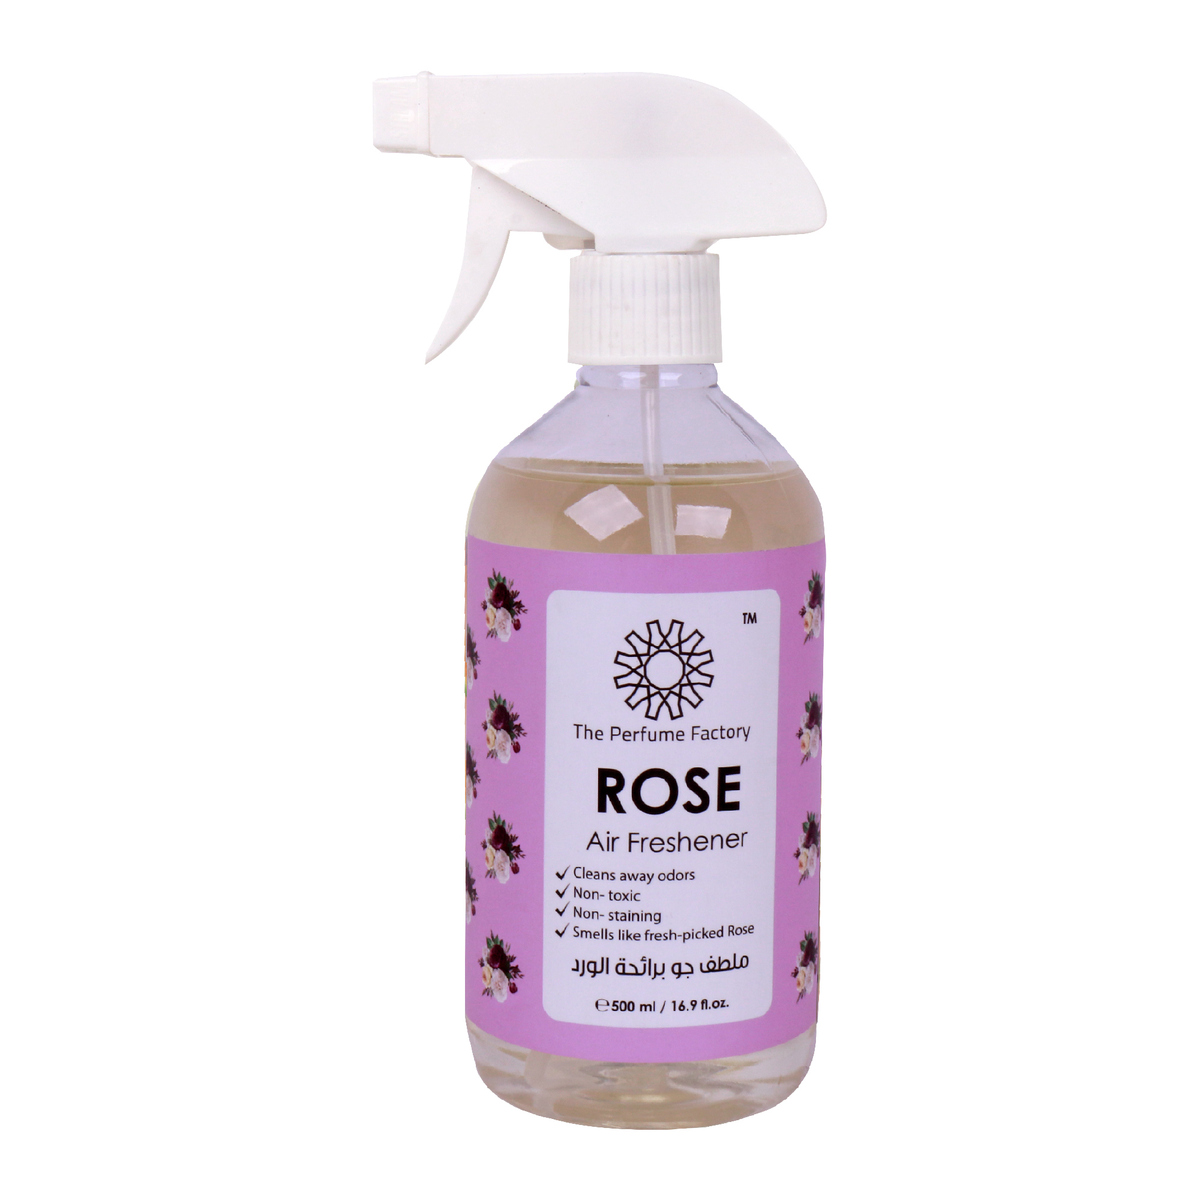 The Perfume Factory Air Freshener Rose 500ml